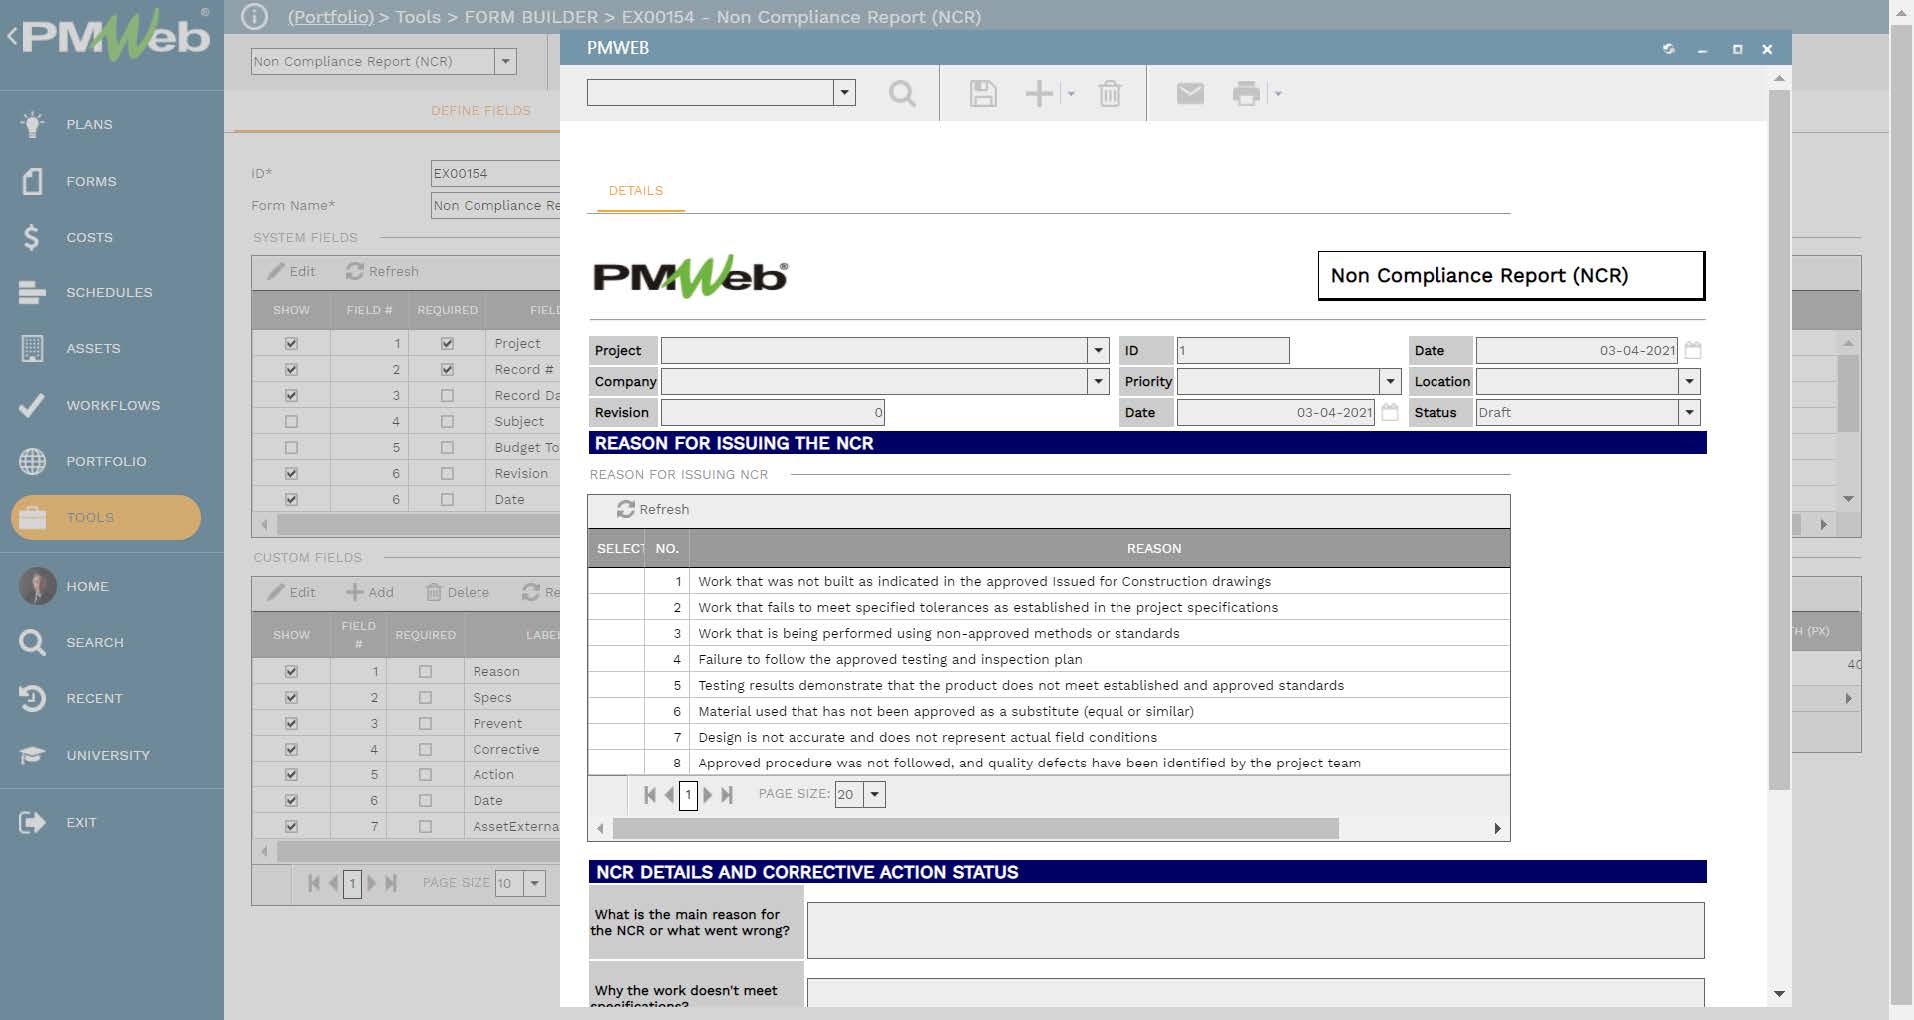 PMWeb 7 Tools Form Builder Non Compliance Report Define Fields 
PMWEB Details 